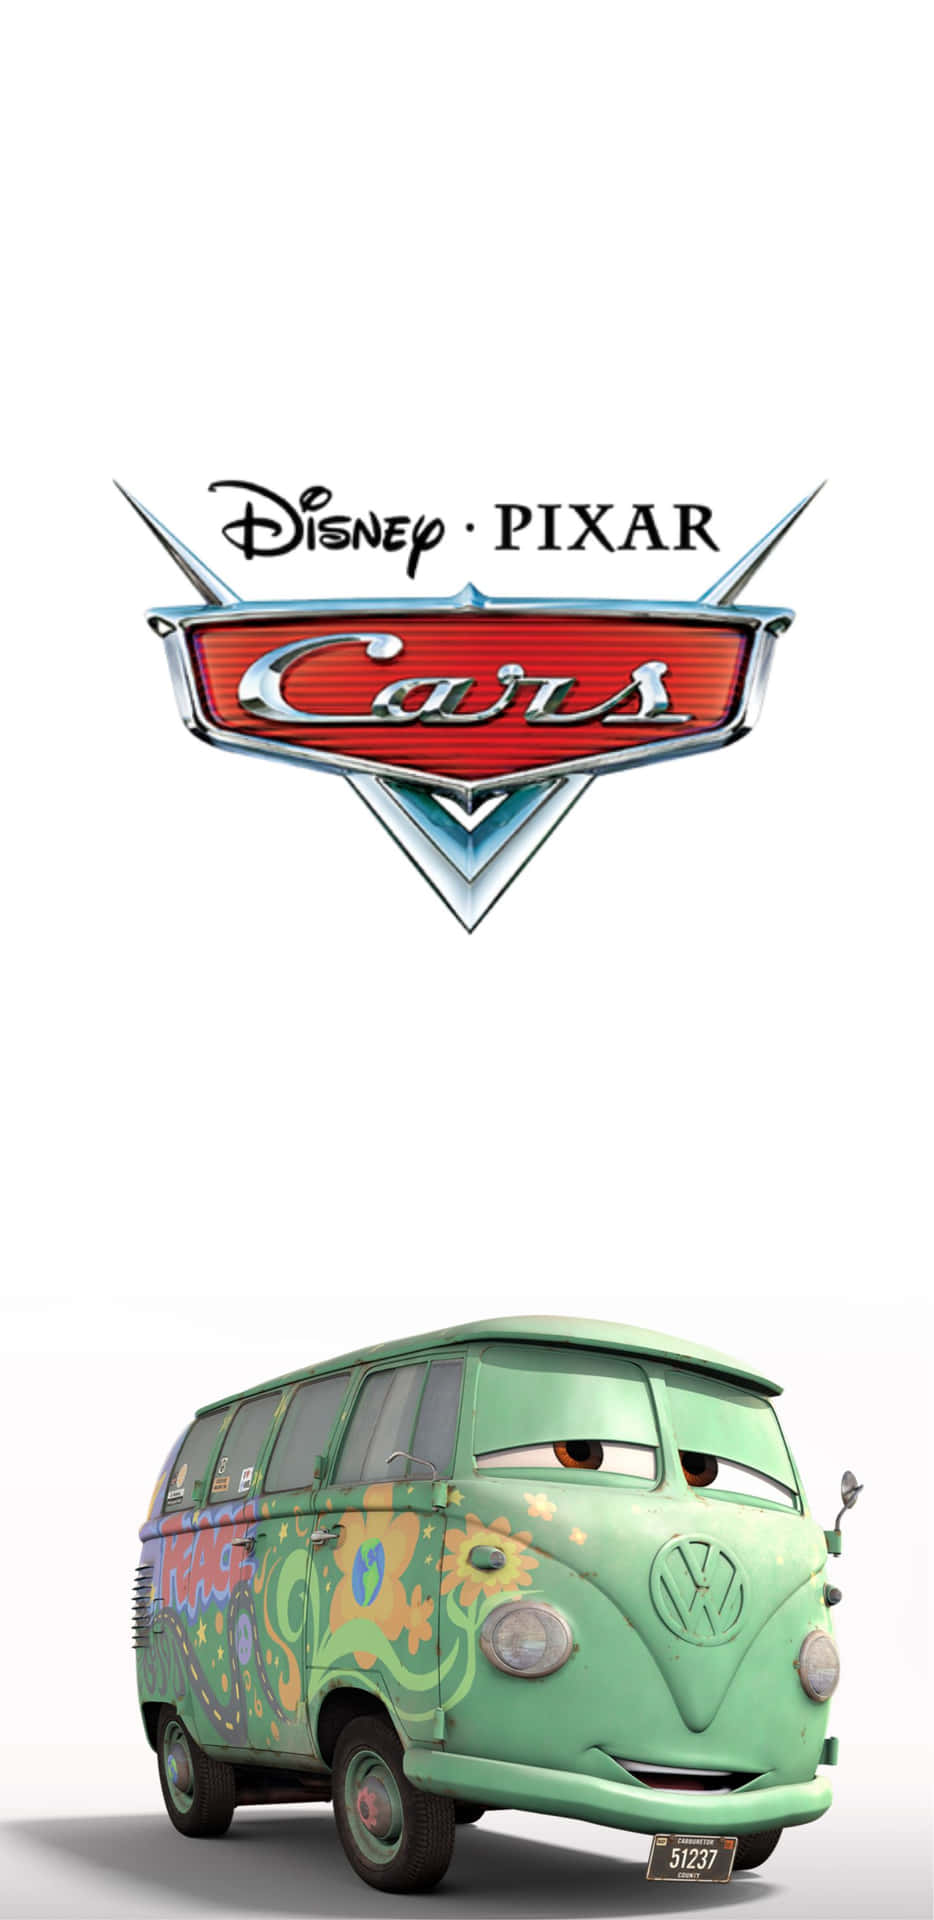 Disneypixar Cars Bakgrundsbild.